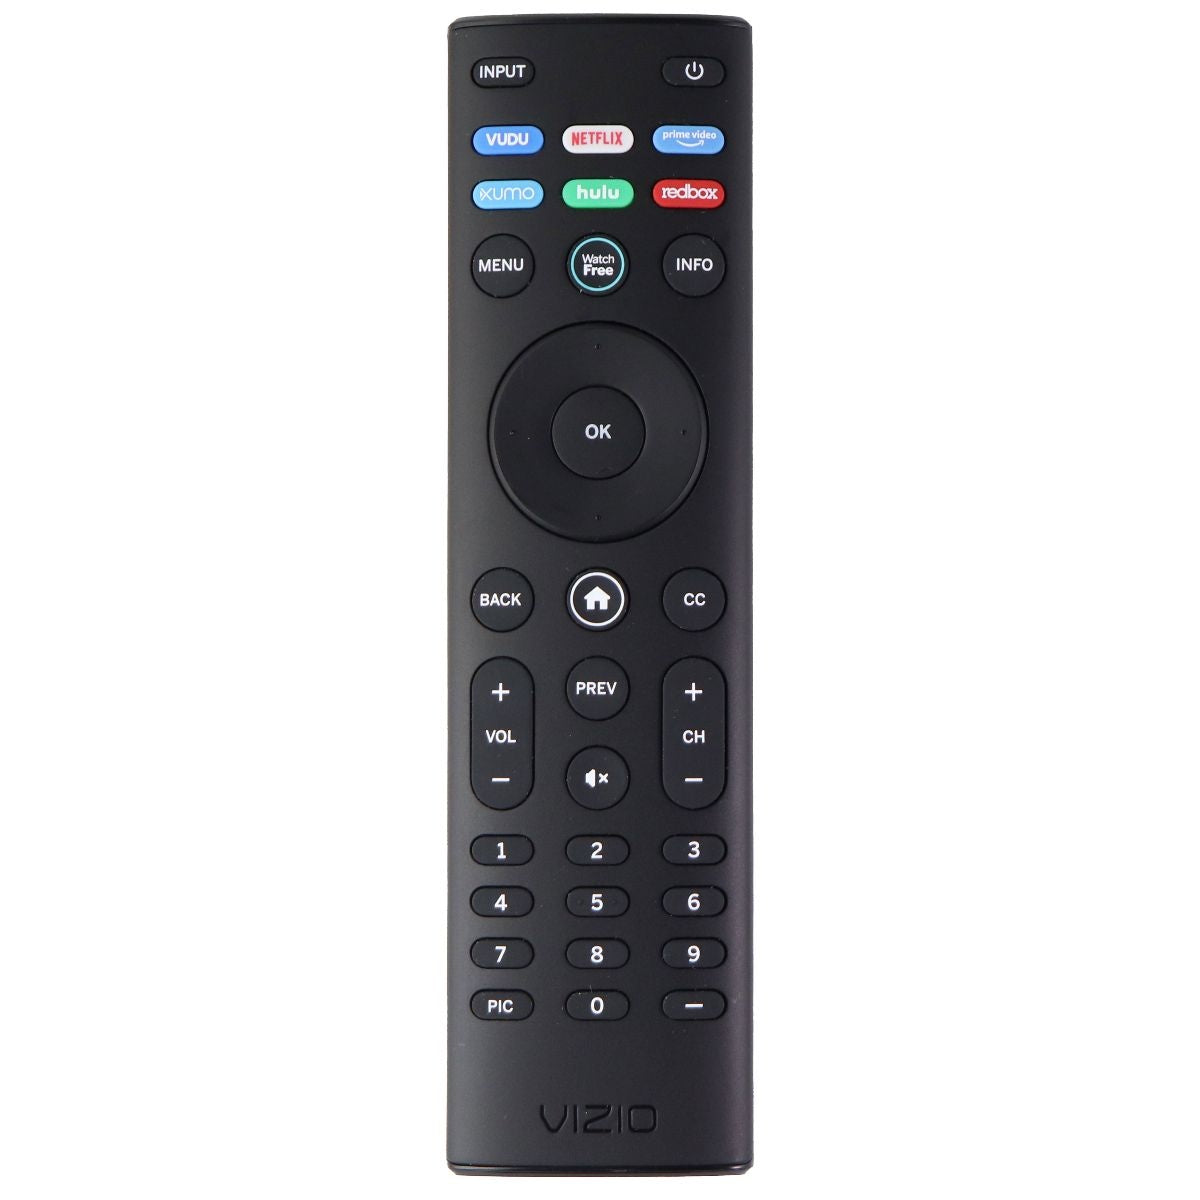 Vizio Remote (XRT140) with Vudu / Netflix / Prime / Xumo / Hulu / RedBox - Black TV, Video & Audio Accessories - Remote Controls Vizio    - Simple Cell Bulk Wholesale Pricing - USA Seller